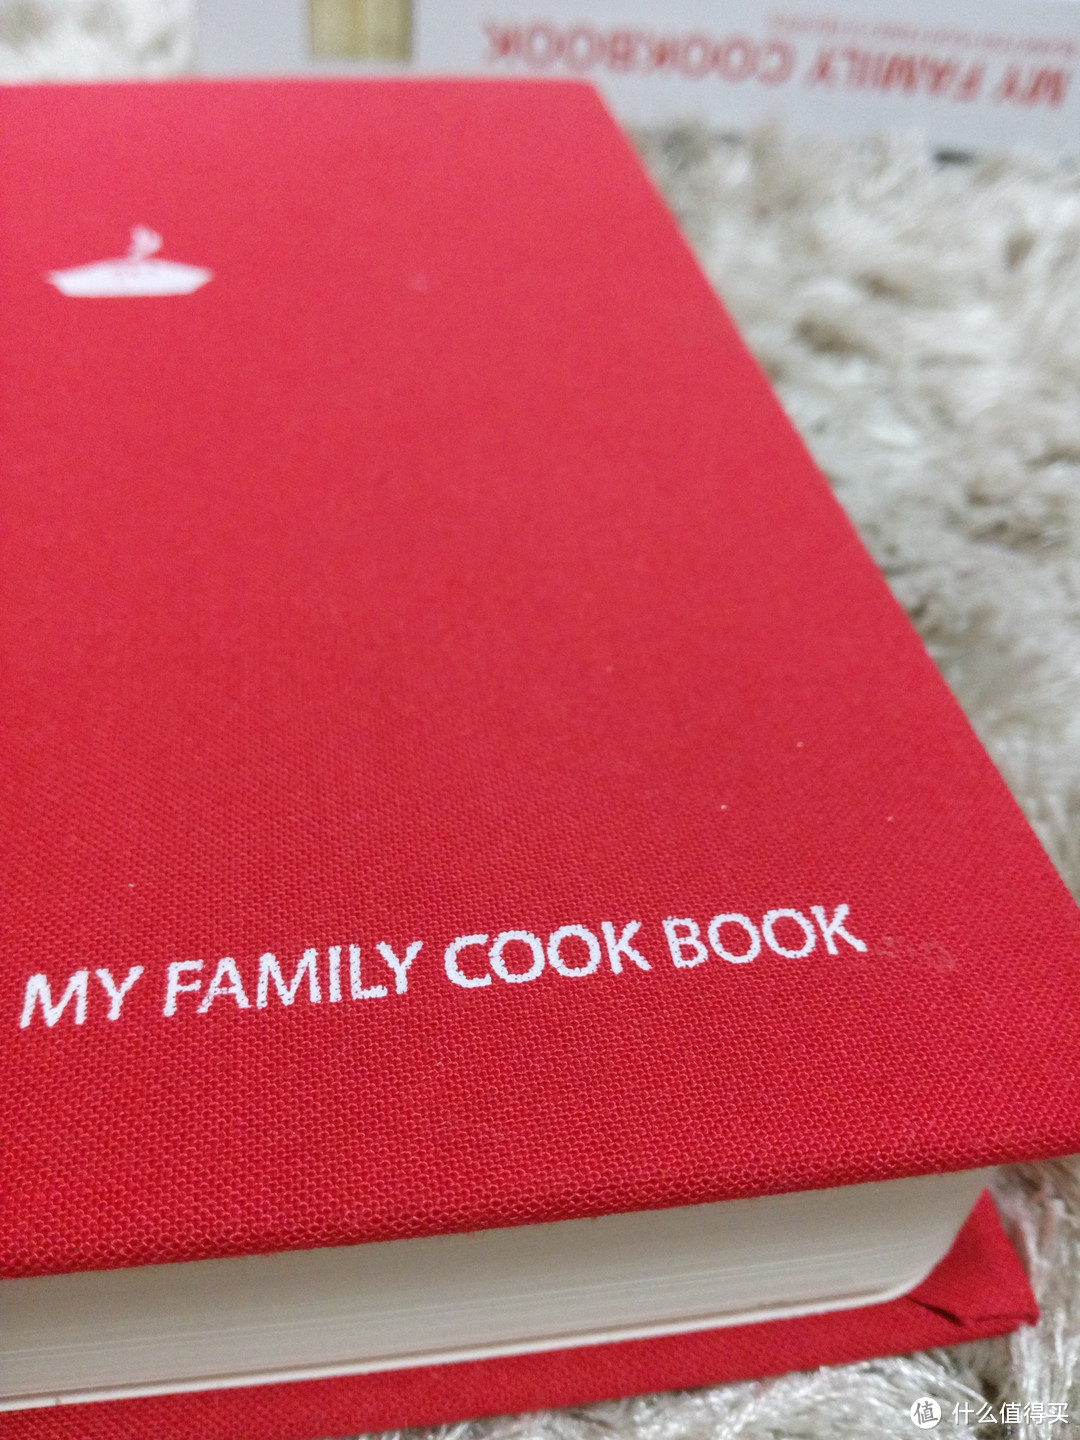 我的家庭菜谱：SUCK UK—My Family Cook Book